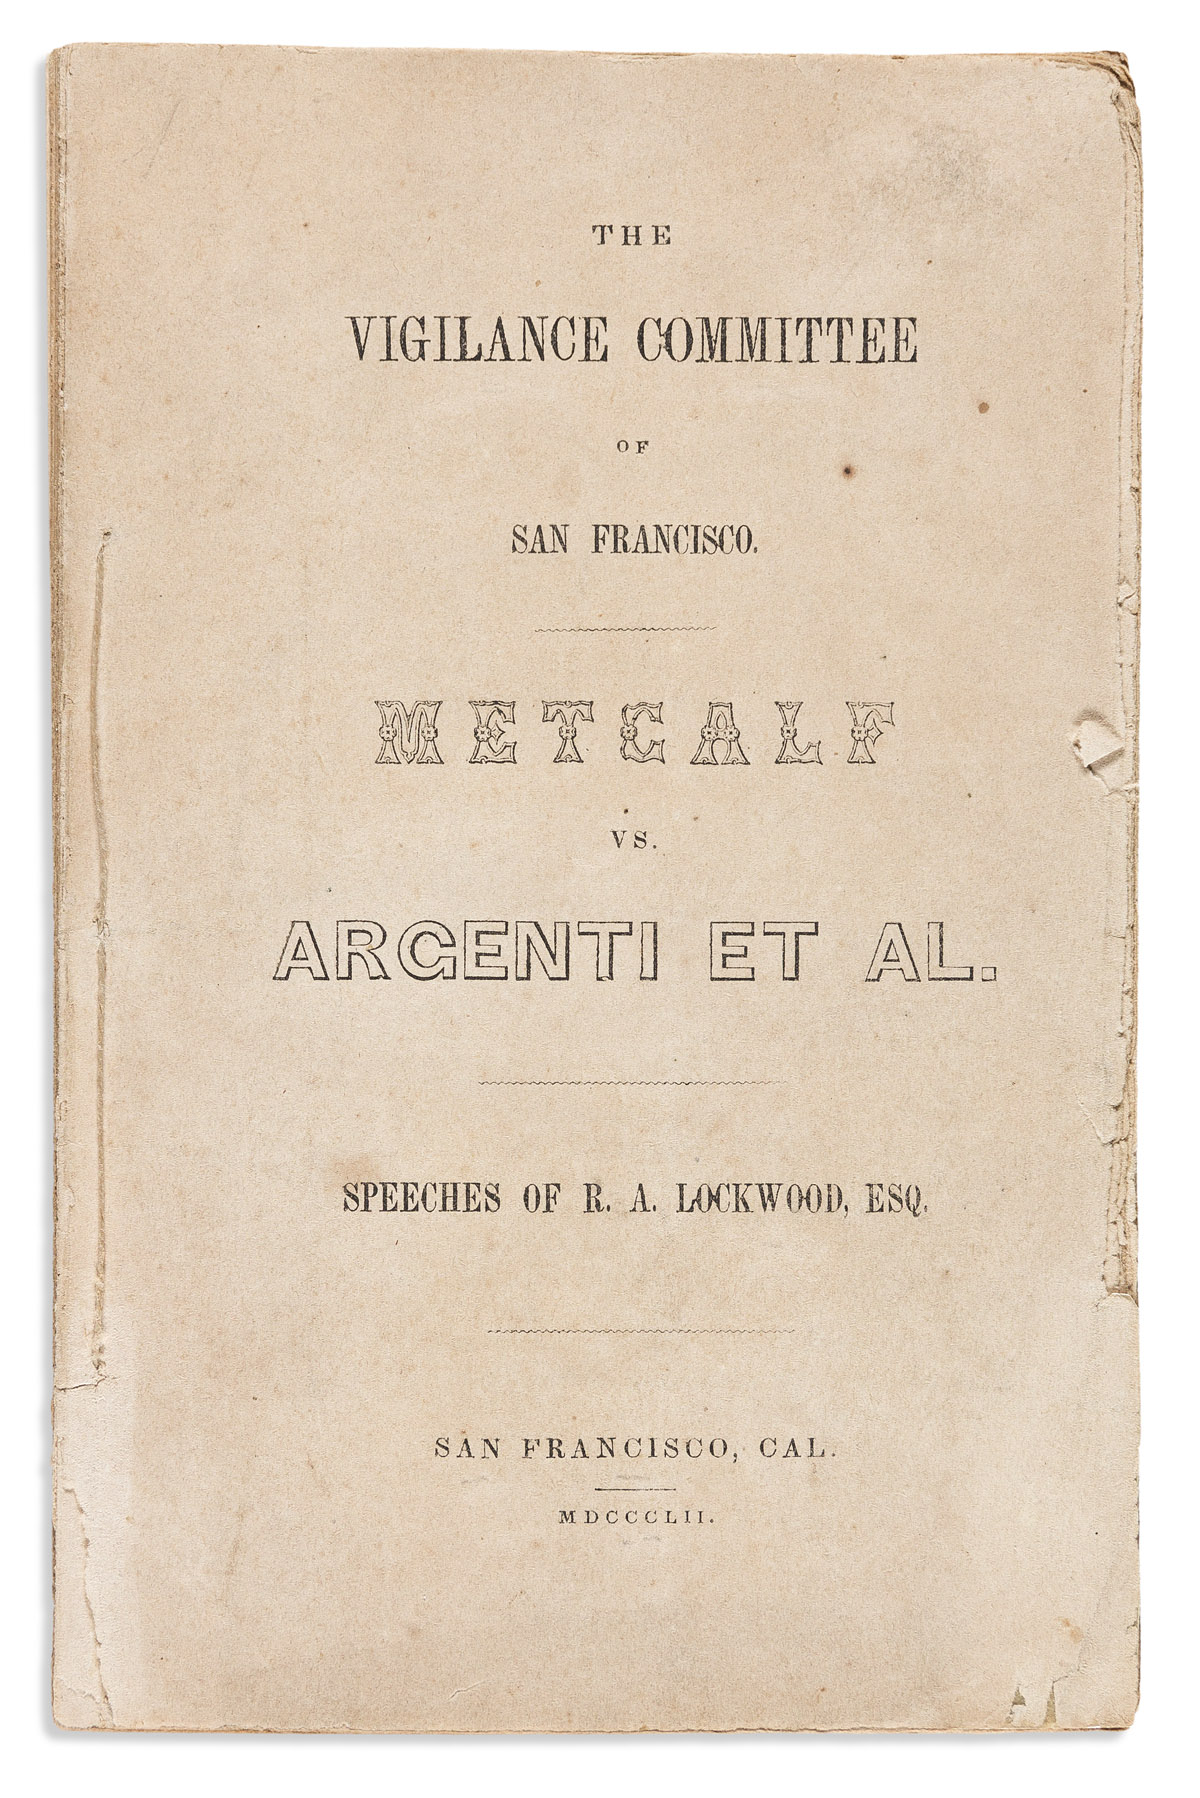 (CALIFORNIA.) Rufus A. Lockwood. The Vigilance Committee of San Francisco: Metcalf vs. Argenti et al.